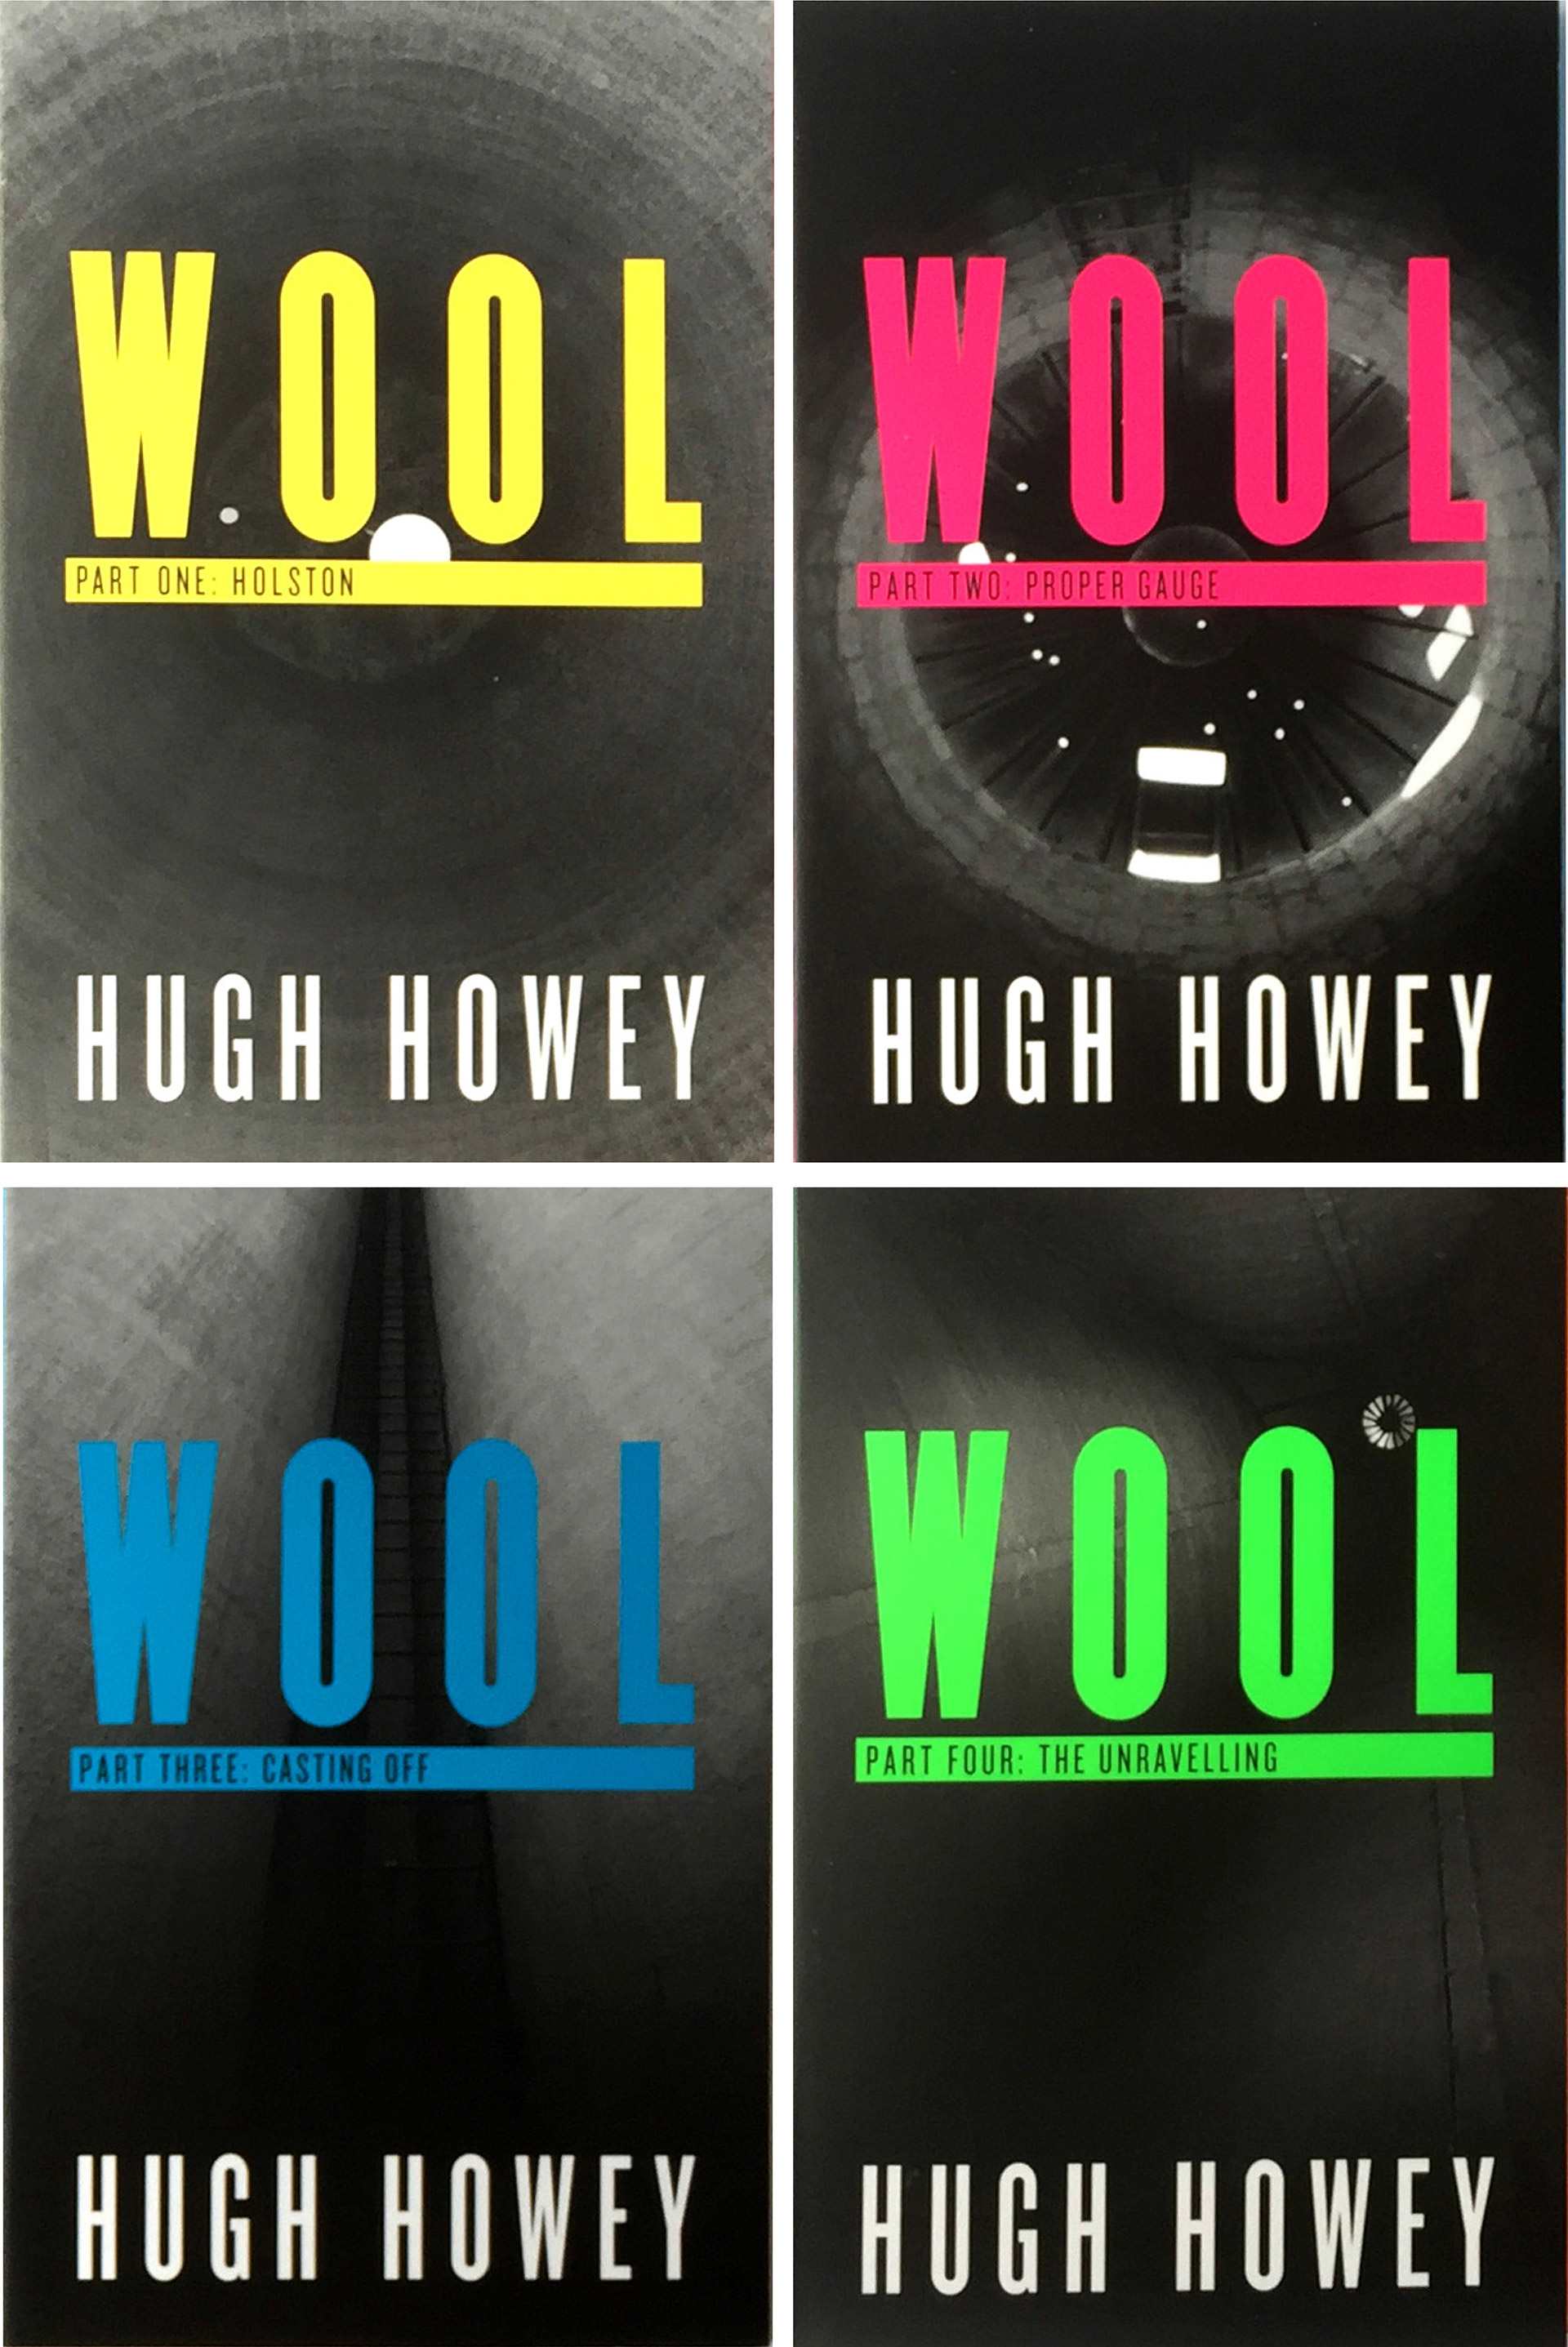 Hugh Howey's Wool series proof covers designed by Irish Butcher